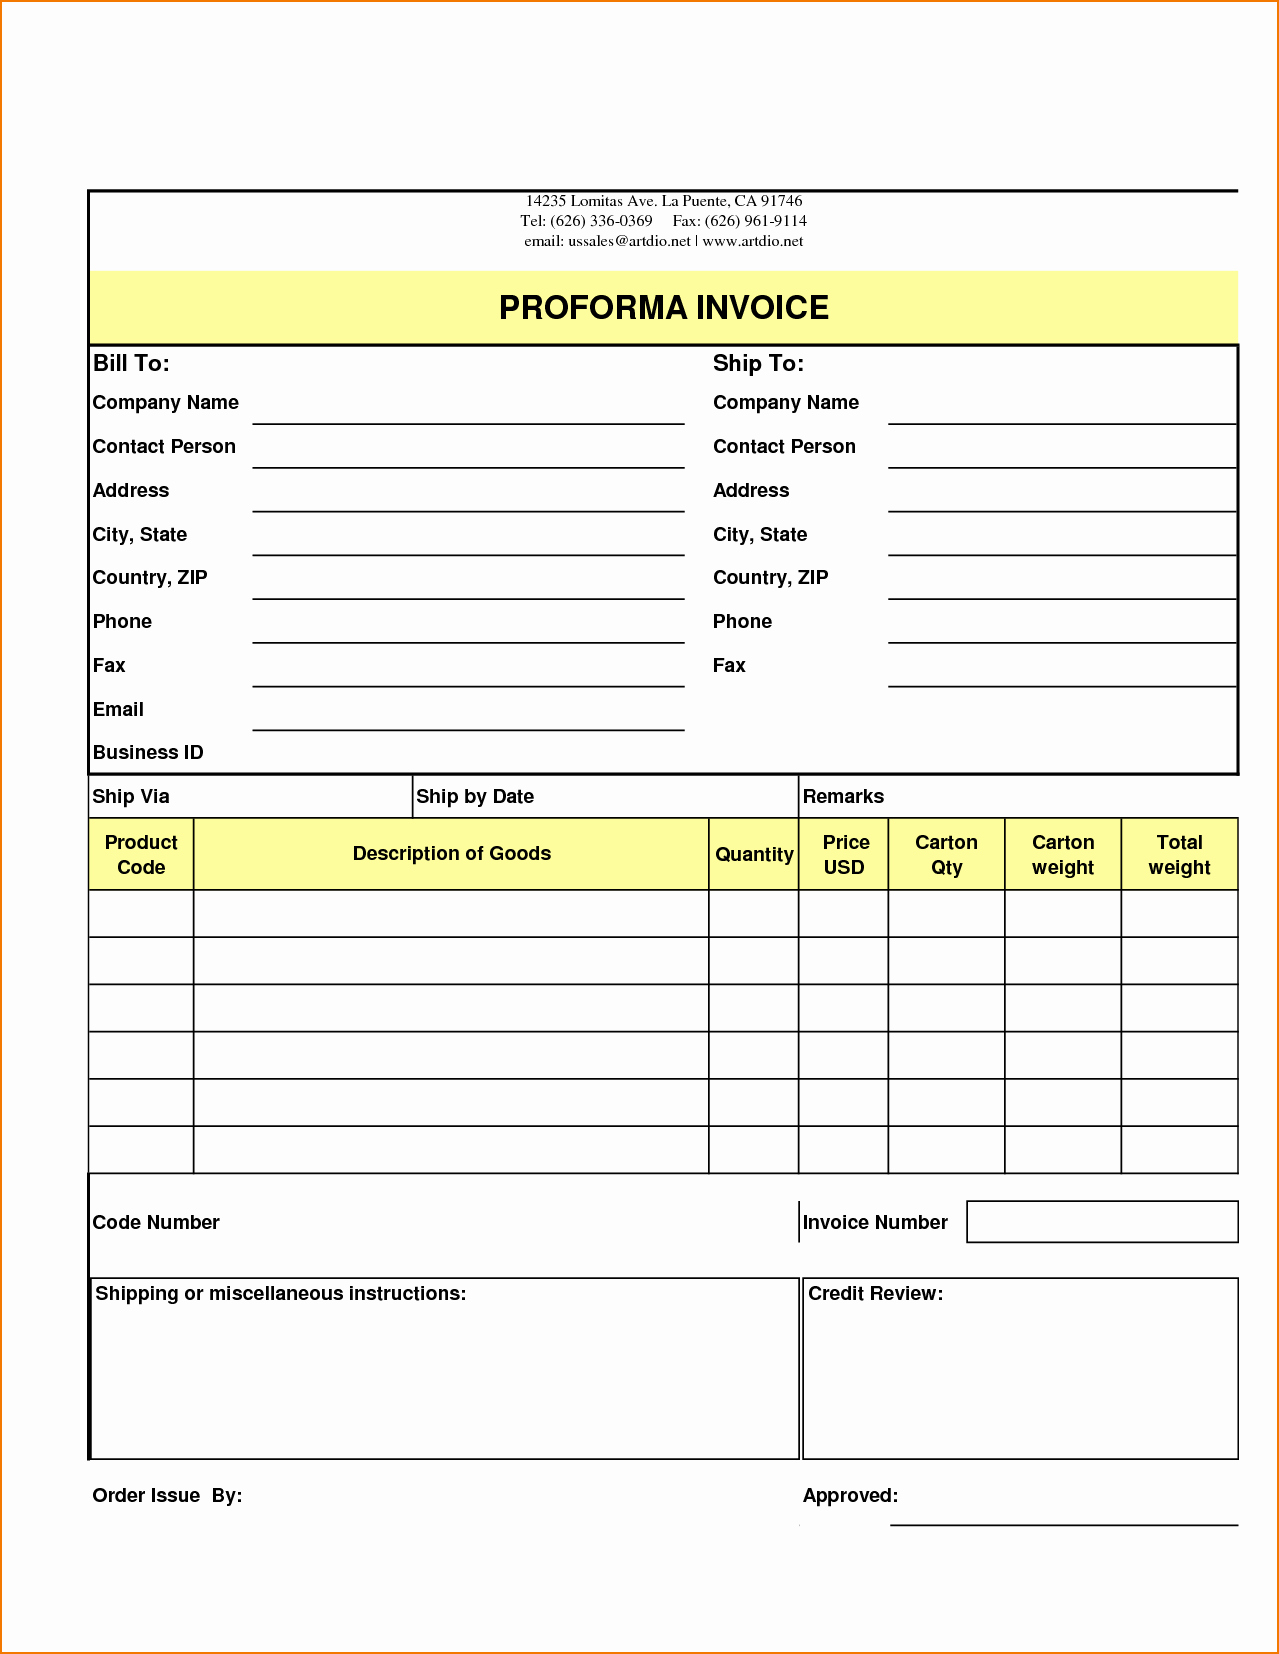 Sales order Template Excel Best Of 5 order form Template Excel